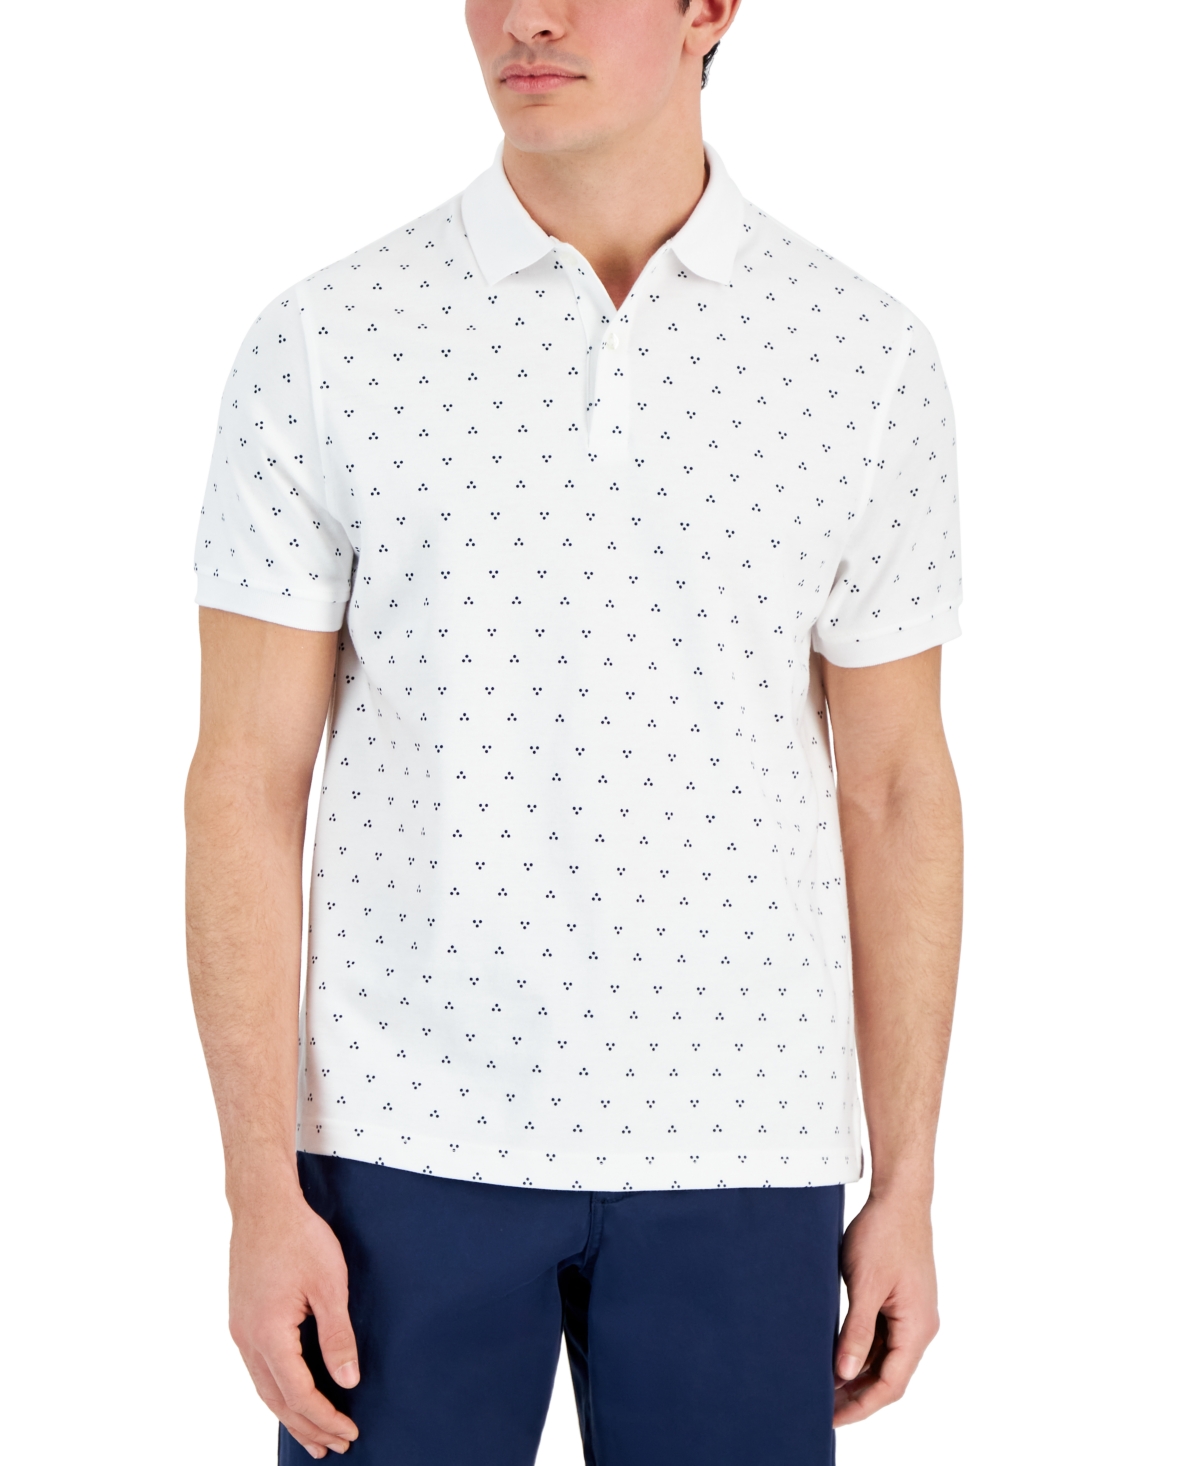 Men's Taylor Printed Short Sleeve Novelty Interlock Polo Shirt, Created for Macy's - Blue Combo